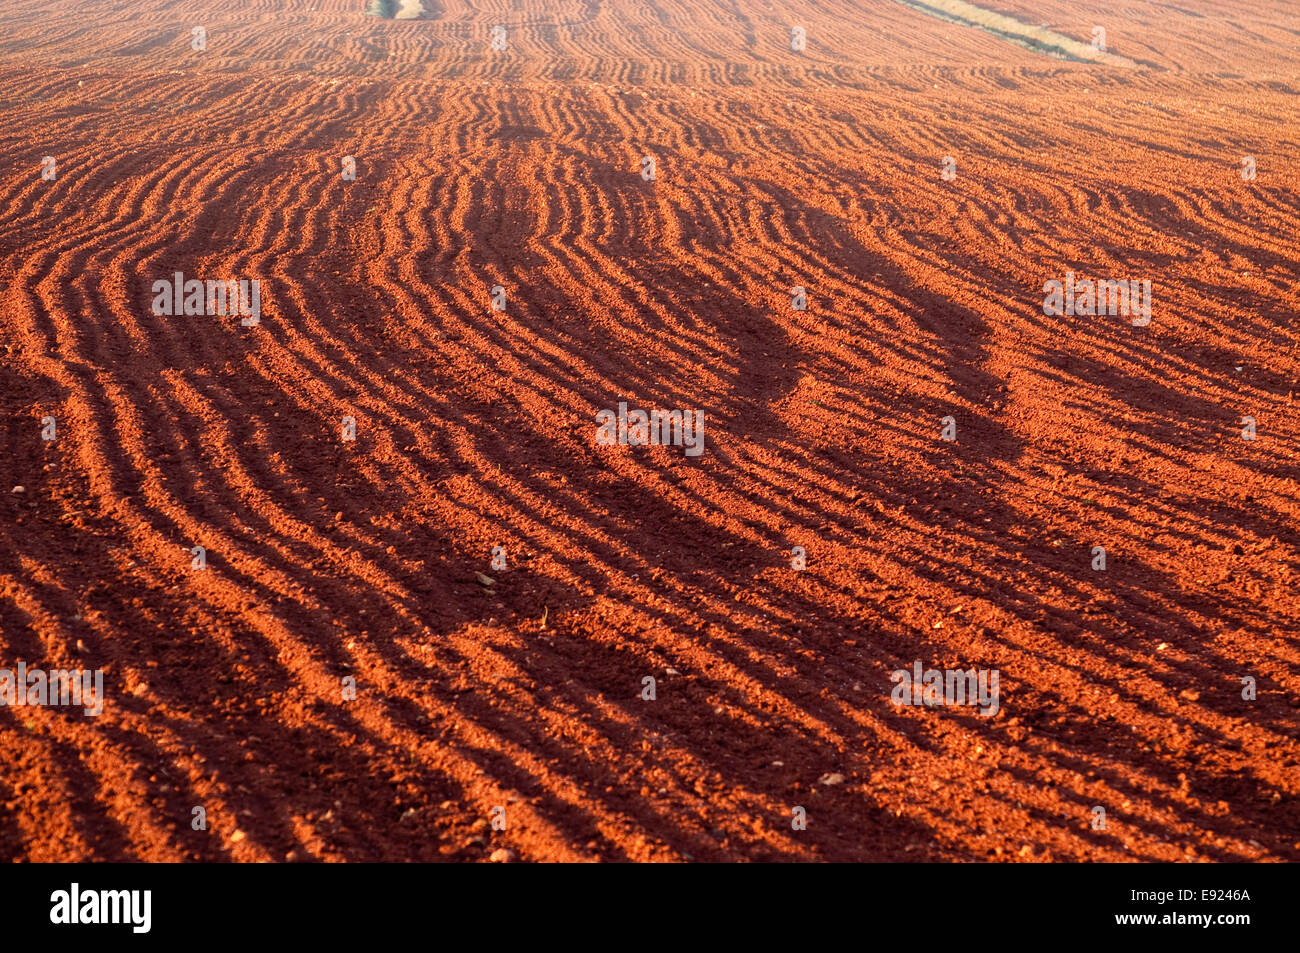 Terra di Siena Foto stock - Alamy